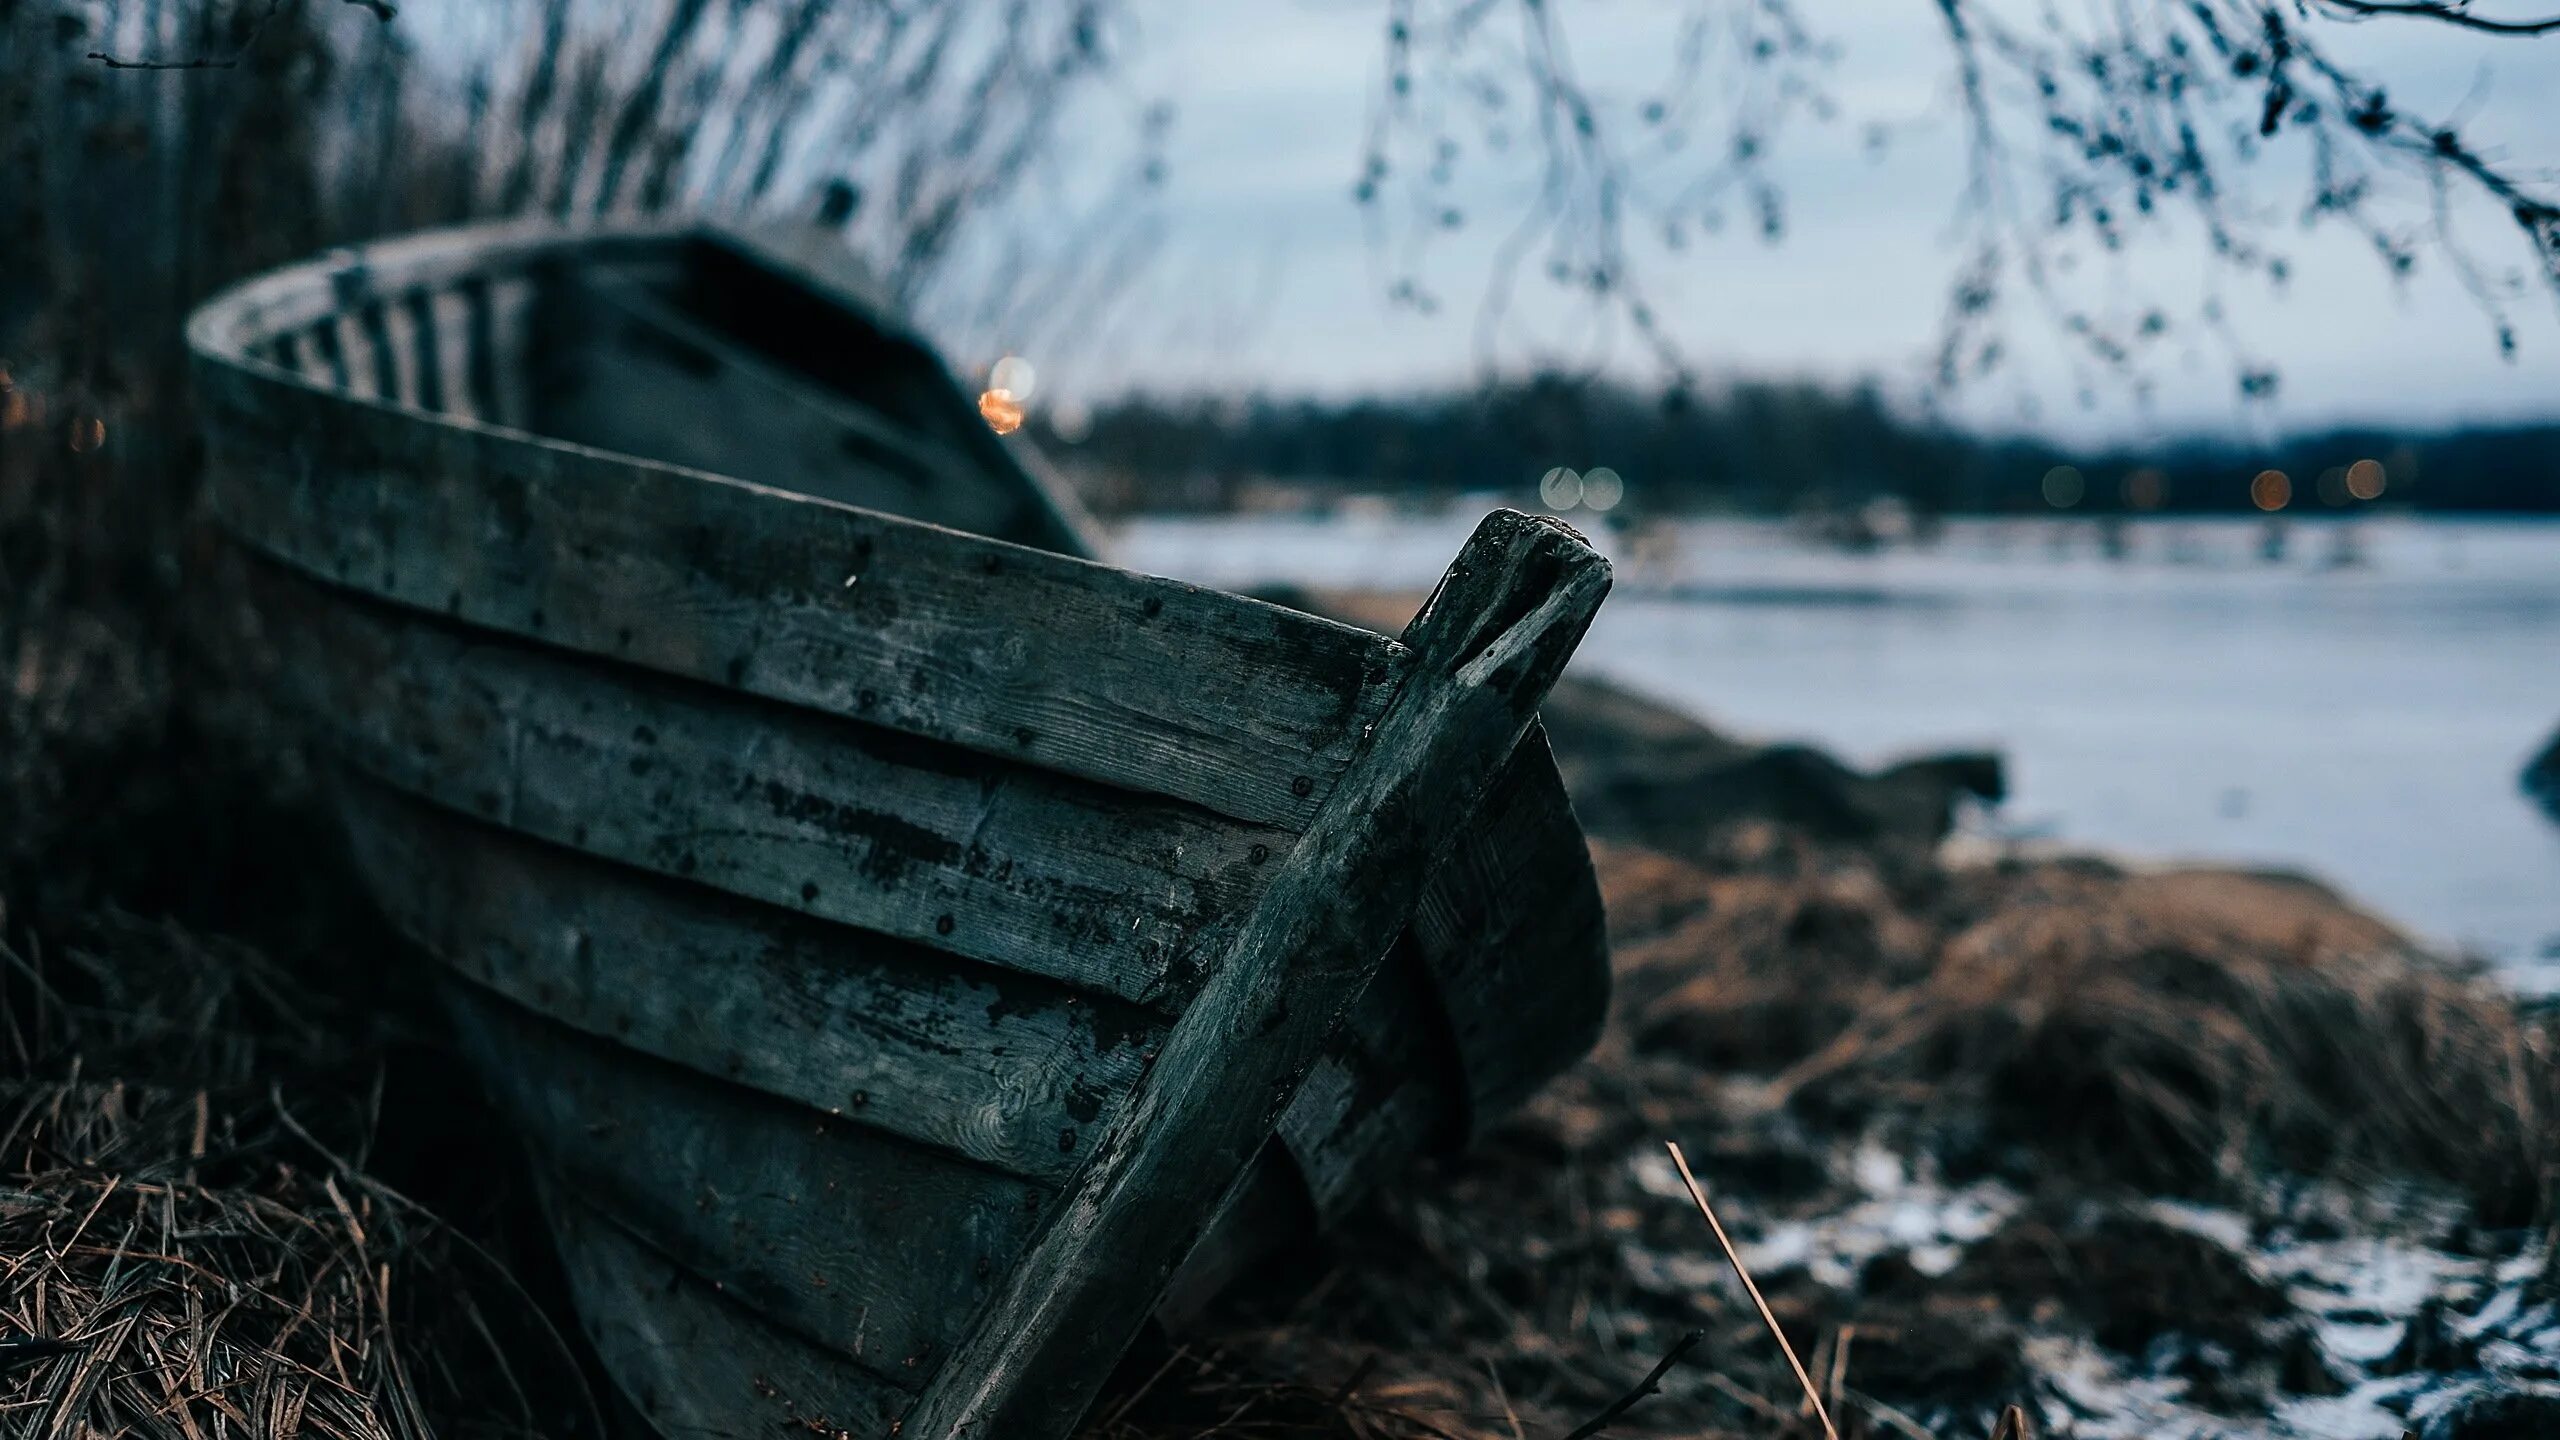 Гаврик спал возле лодки. «Лодка в песке» Эдгара Дегай. Старая деревянная лодка. Лодка на реке. Одинокая лодка.